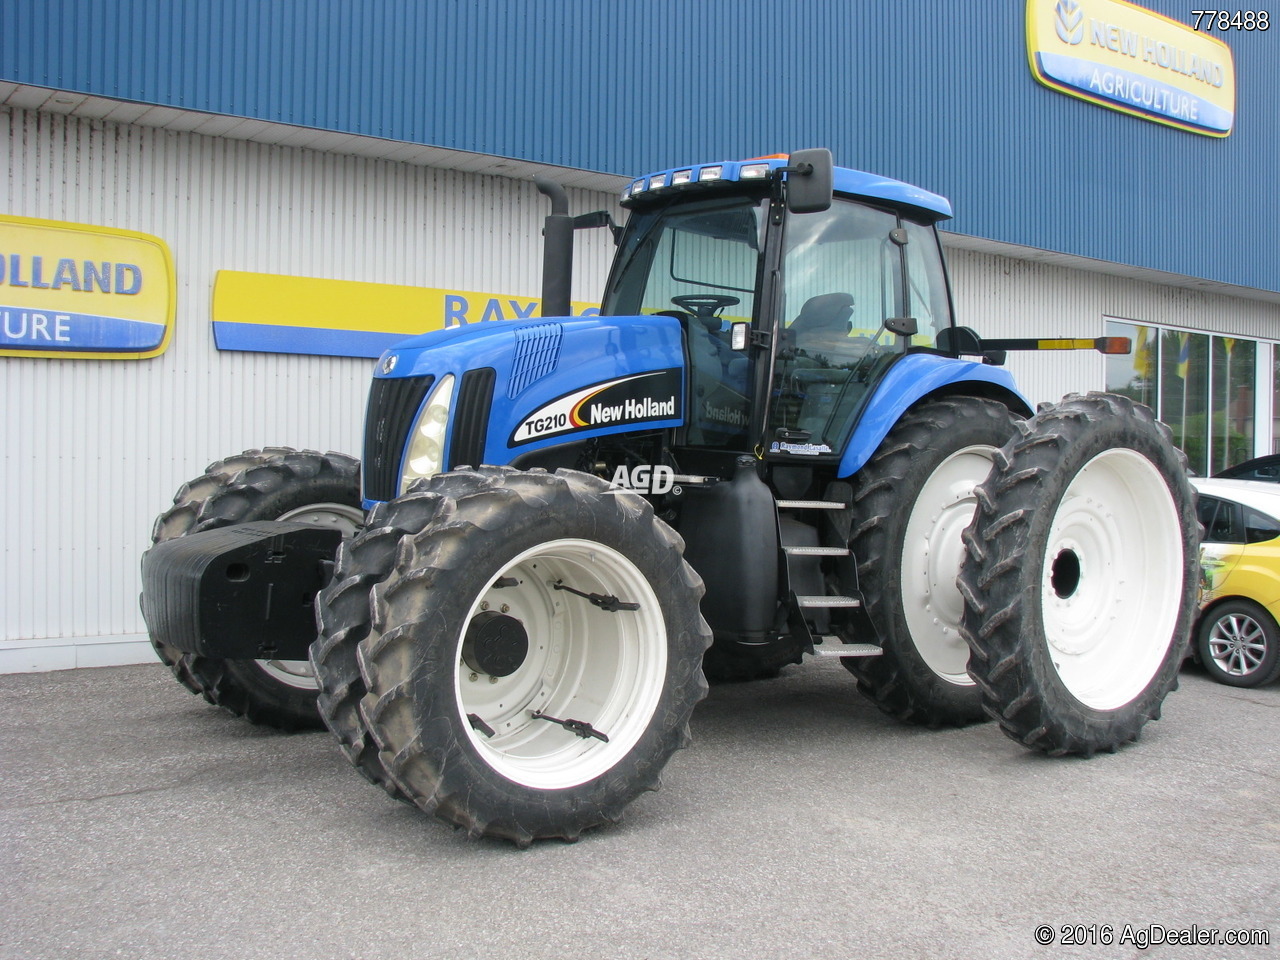 2004 New Holland tg210 Tractor For Sale | AgDealer.com